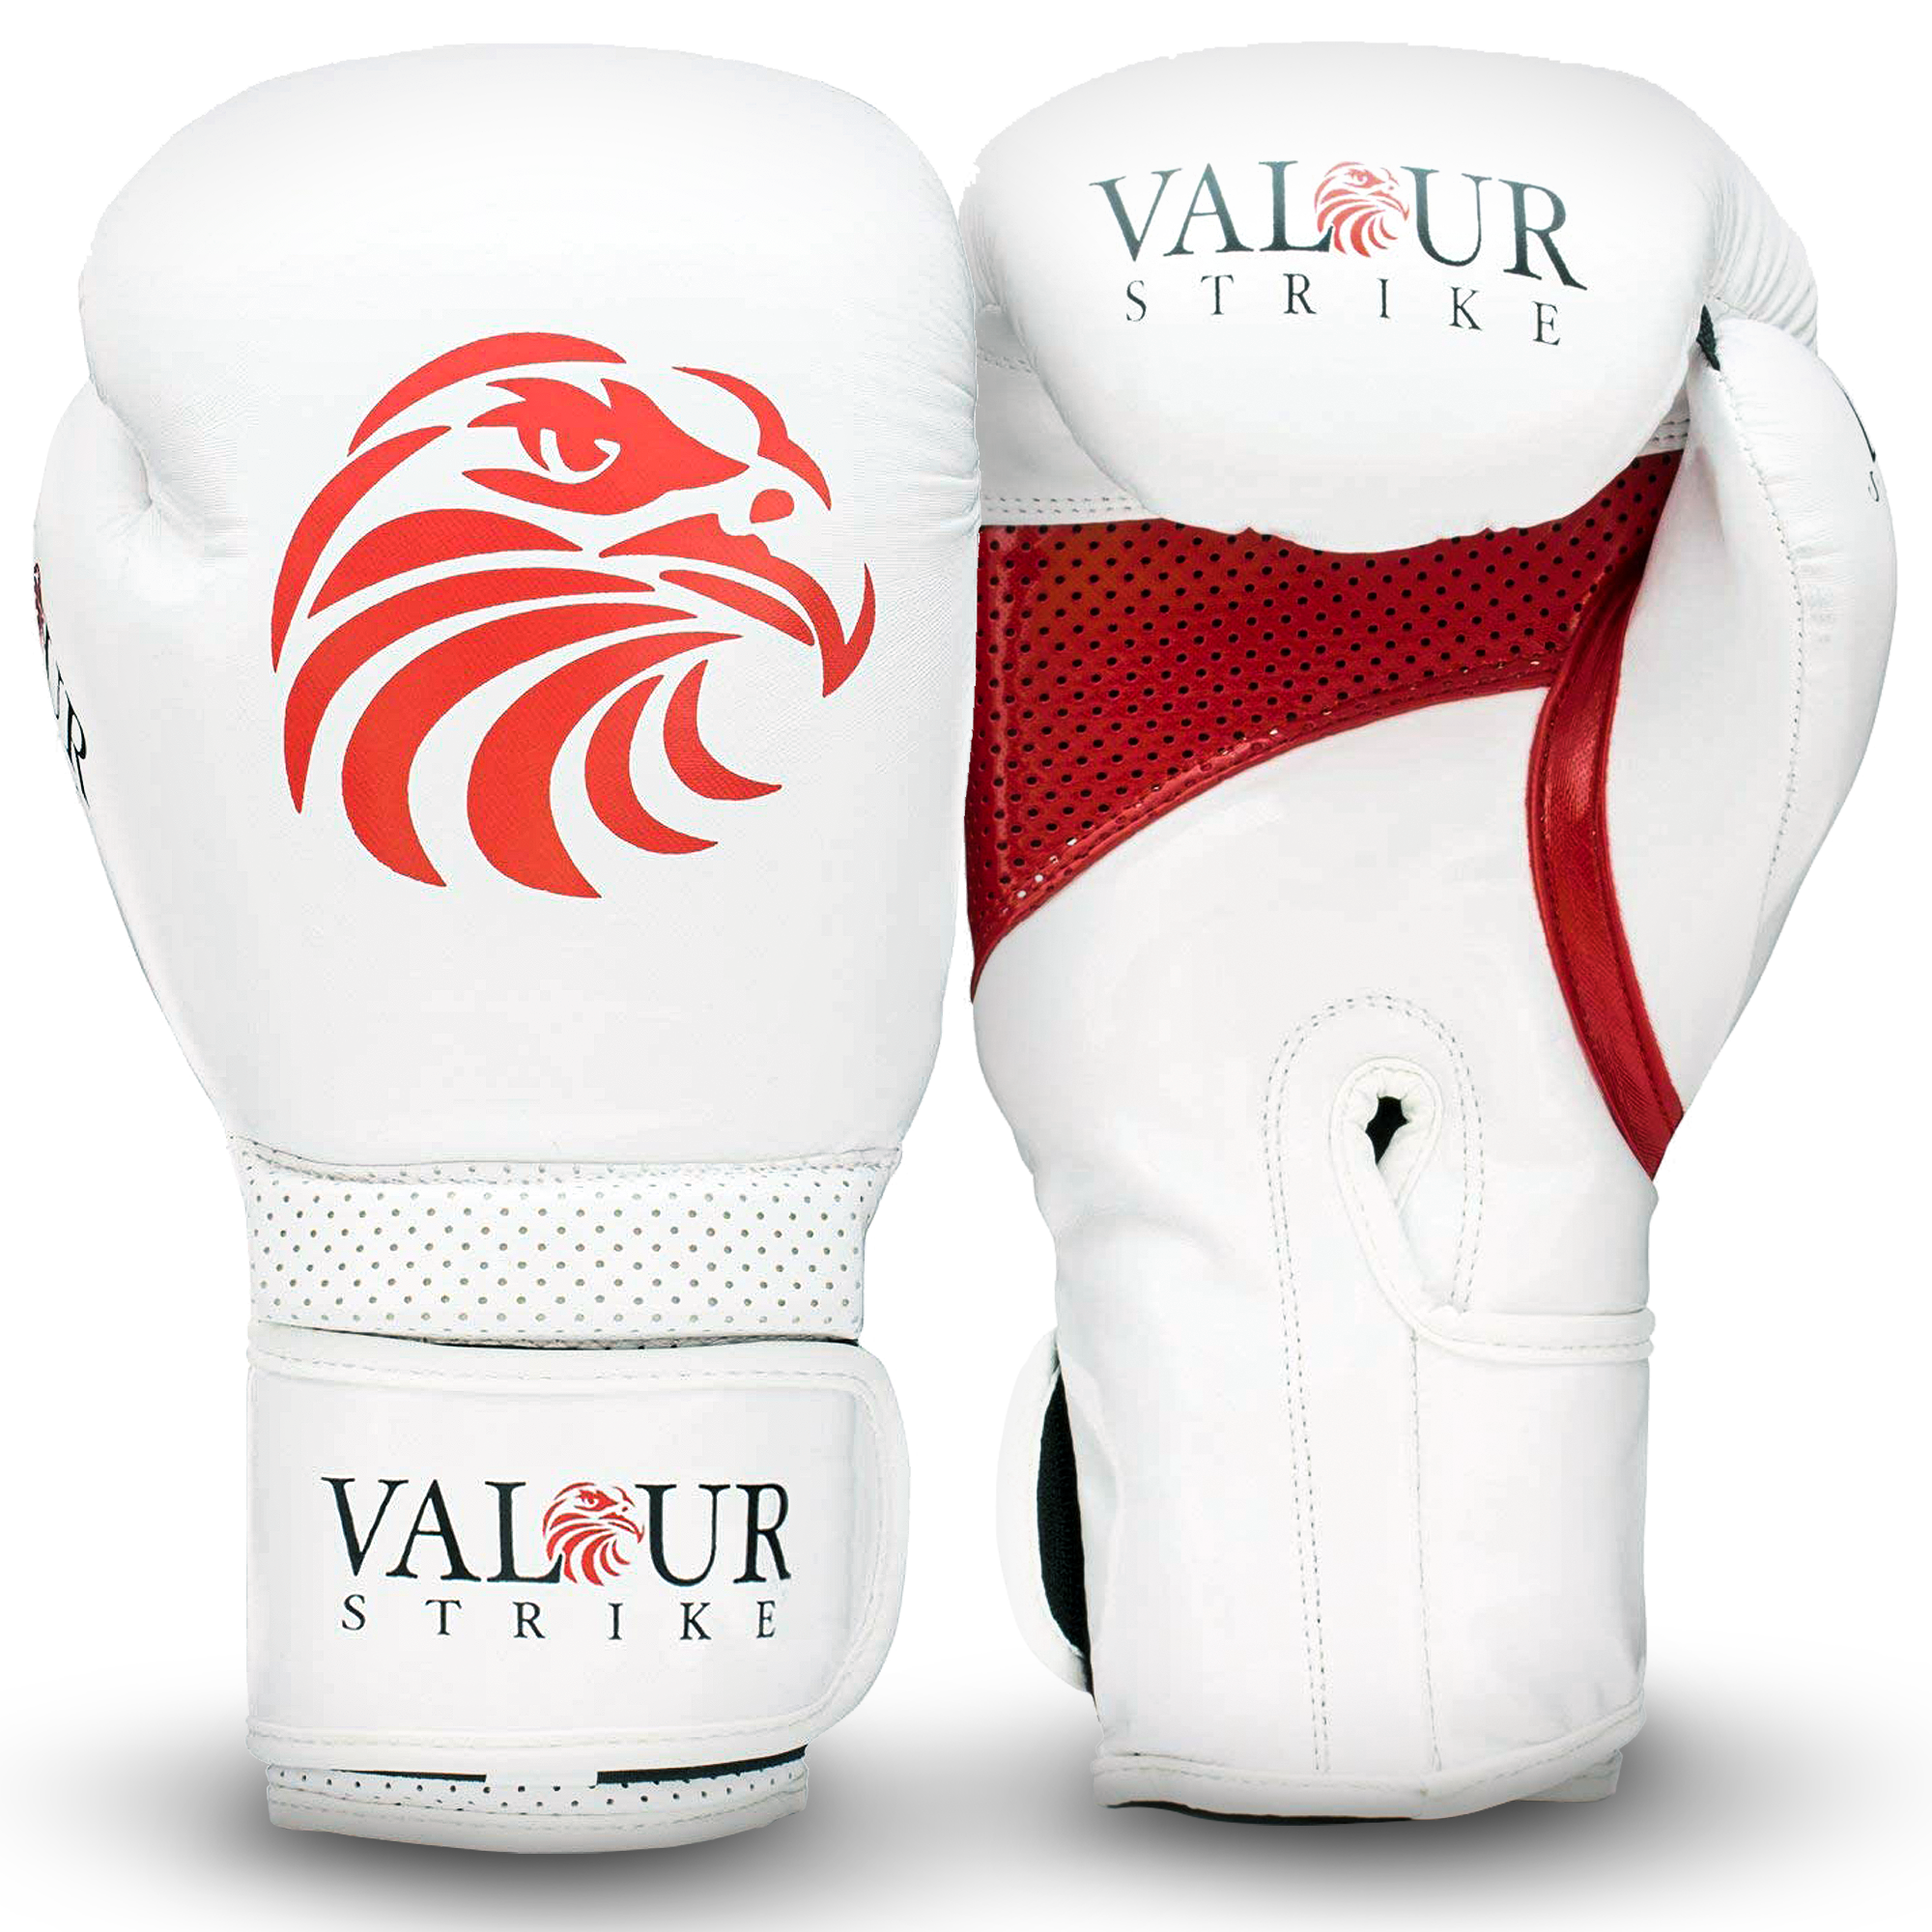 Valour Strike Boxing Gloves, in Redruth, Cornwall